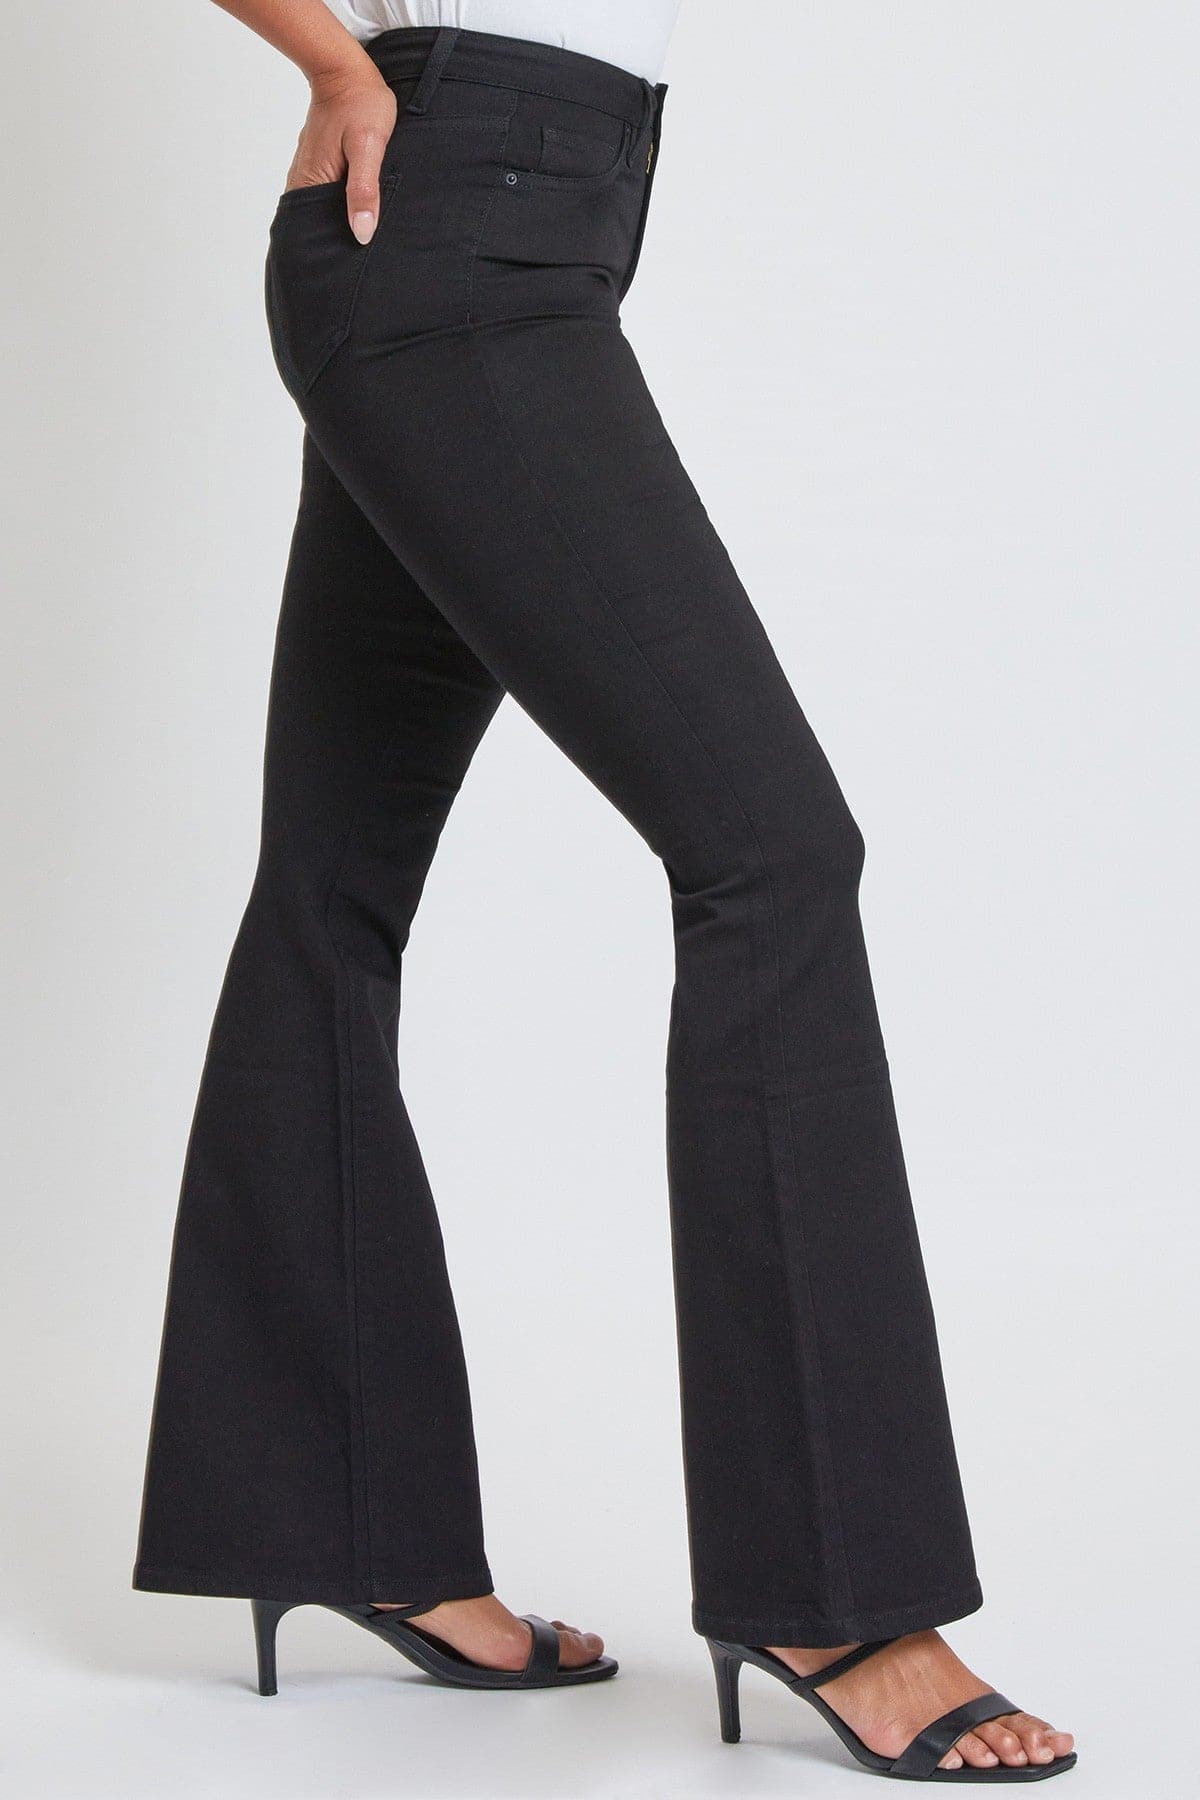 Women's Essential Hyperdenim Flare Jeans - Long